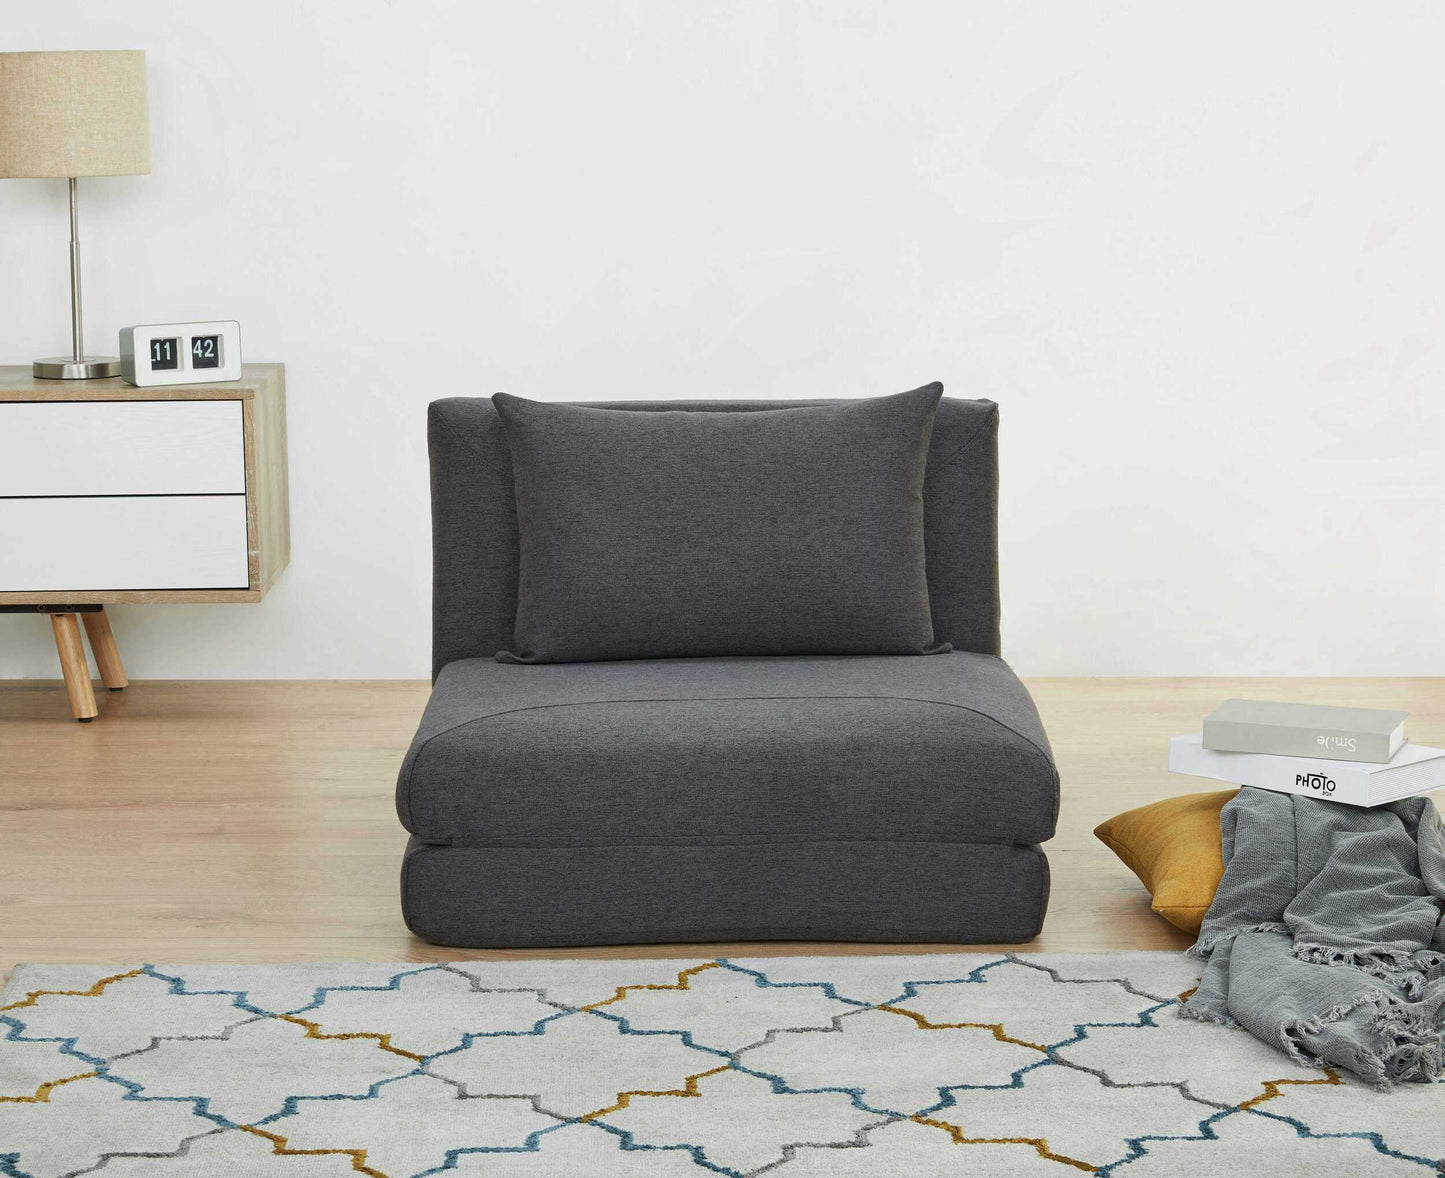 GIA Tri-Fold Convertible Sofa Bed with pillow, Dark Gray